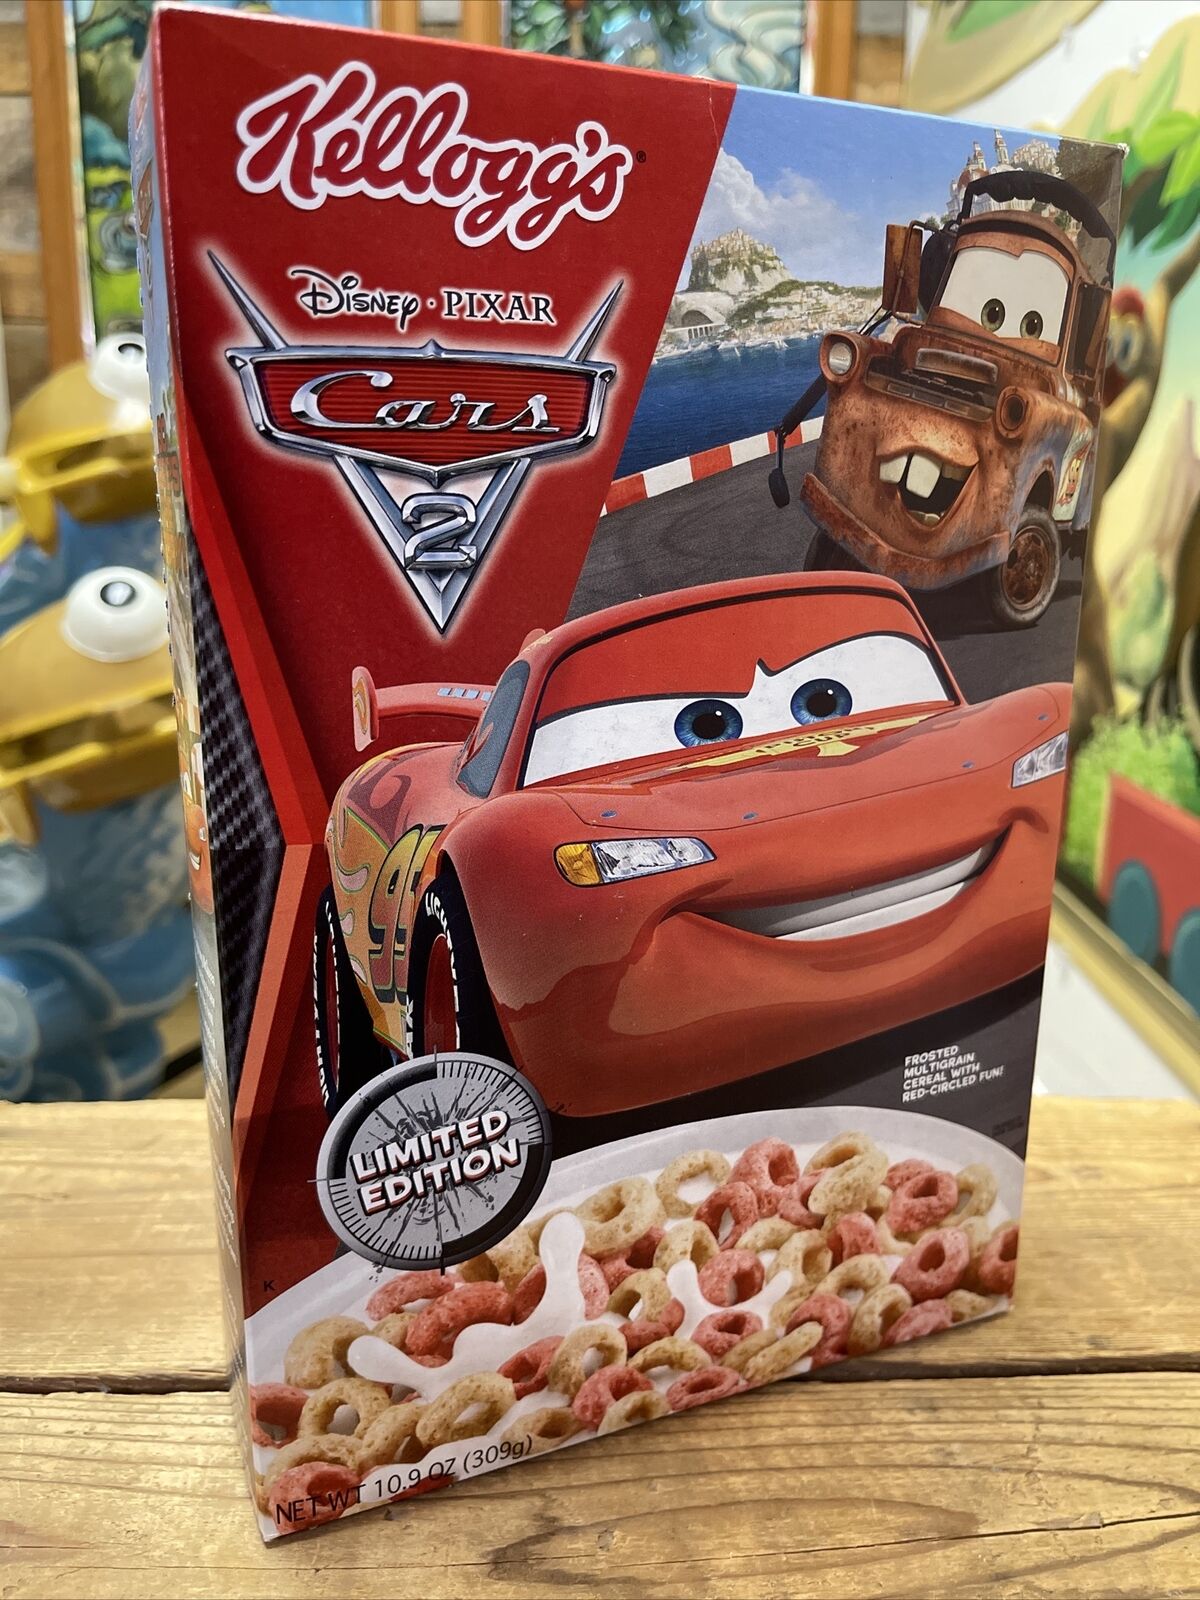 2011 Kellogg’s Disney Pixar Cars 2 Cereal 10.9 oz Full Box Factory Sealed